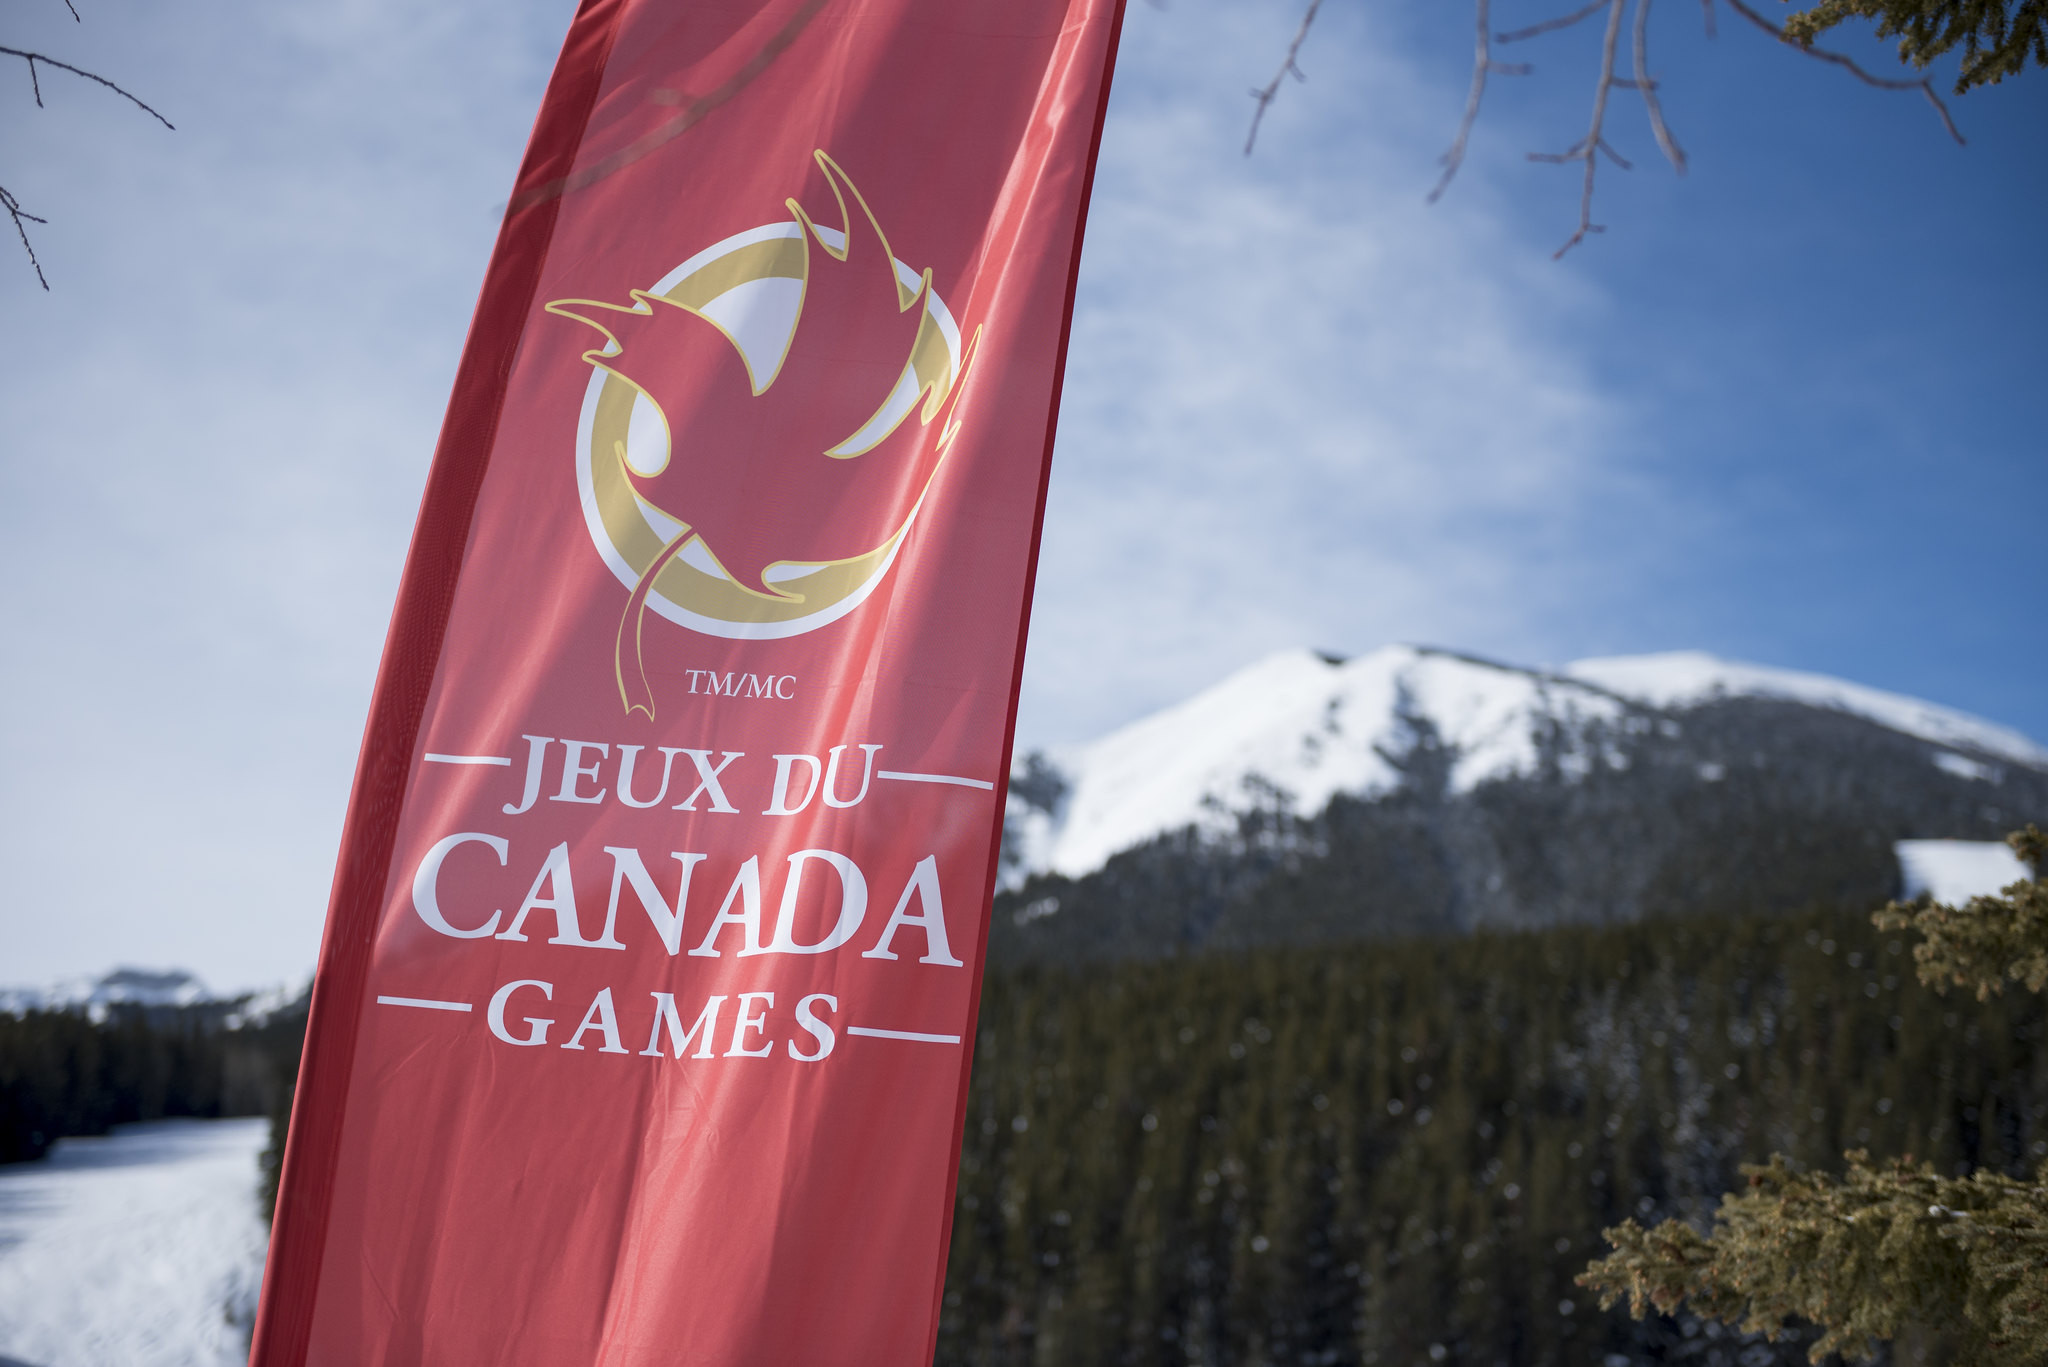 Niagara 2021 Canada Summer Games postponed to 2022 due to COVID-19 pandemic